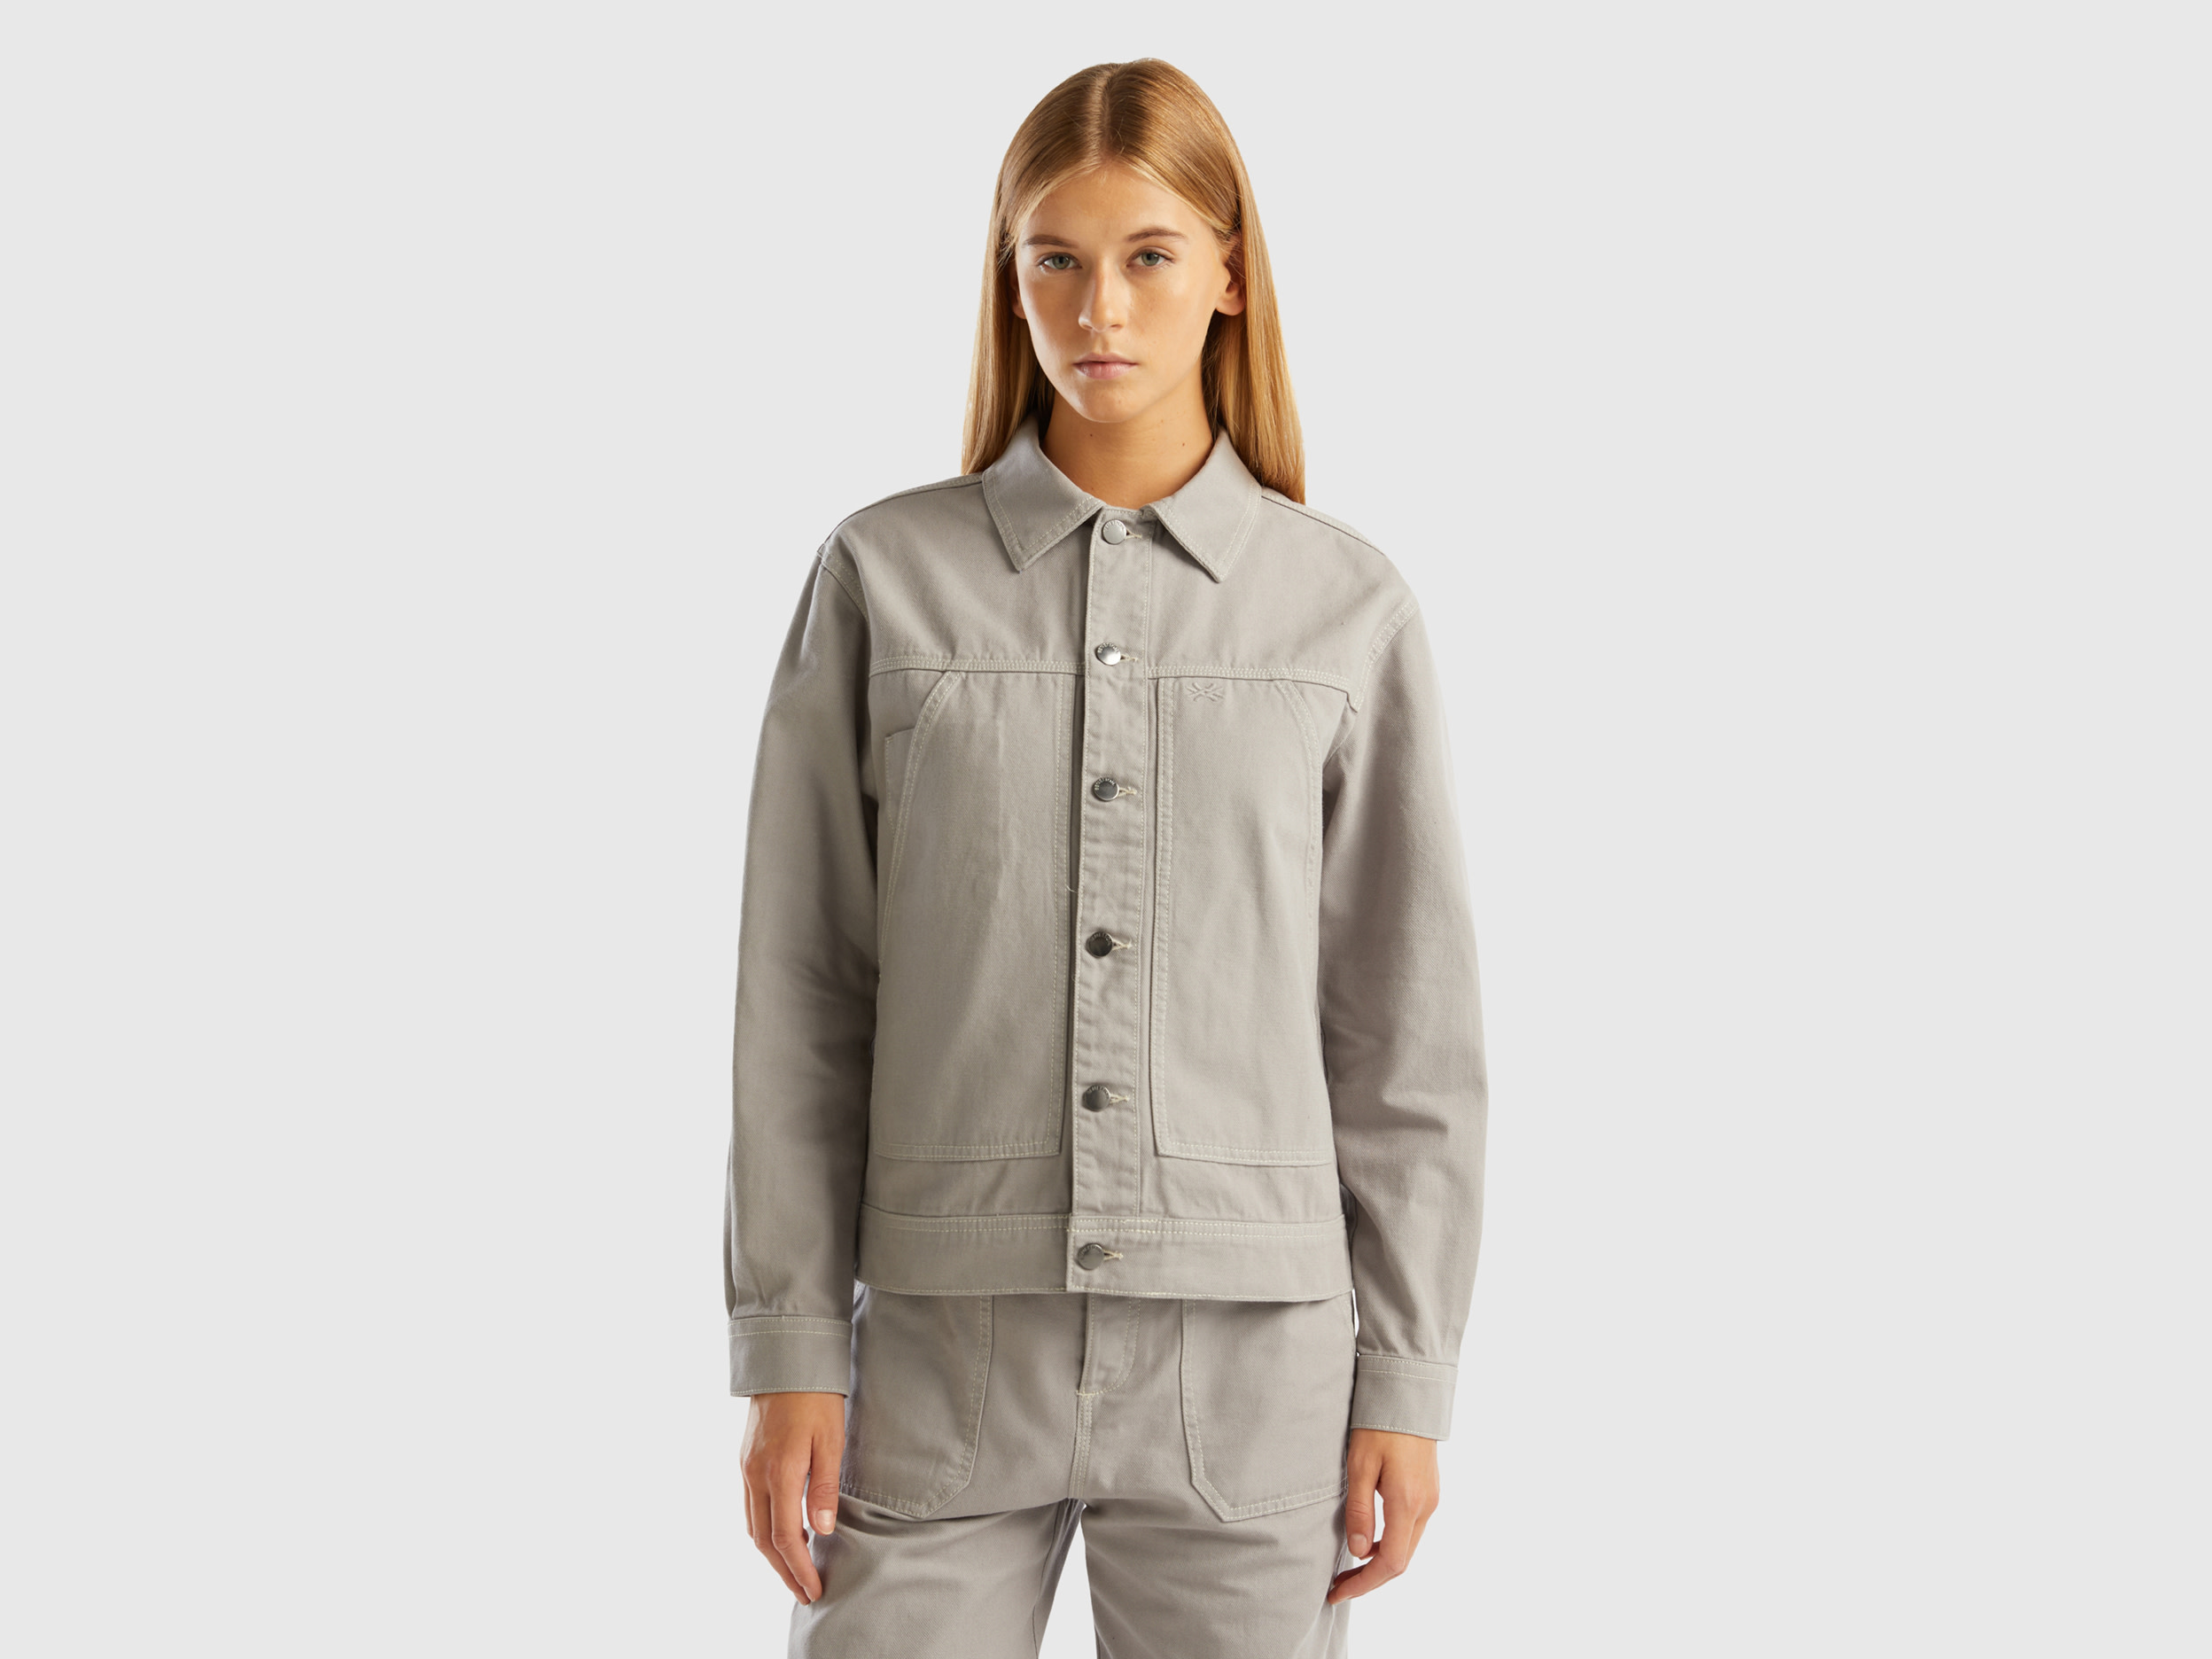 Benetton, Cotton Canvas Jacket, size L, Light Gray, Women